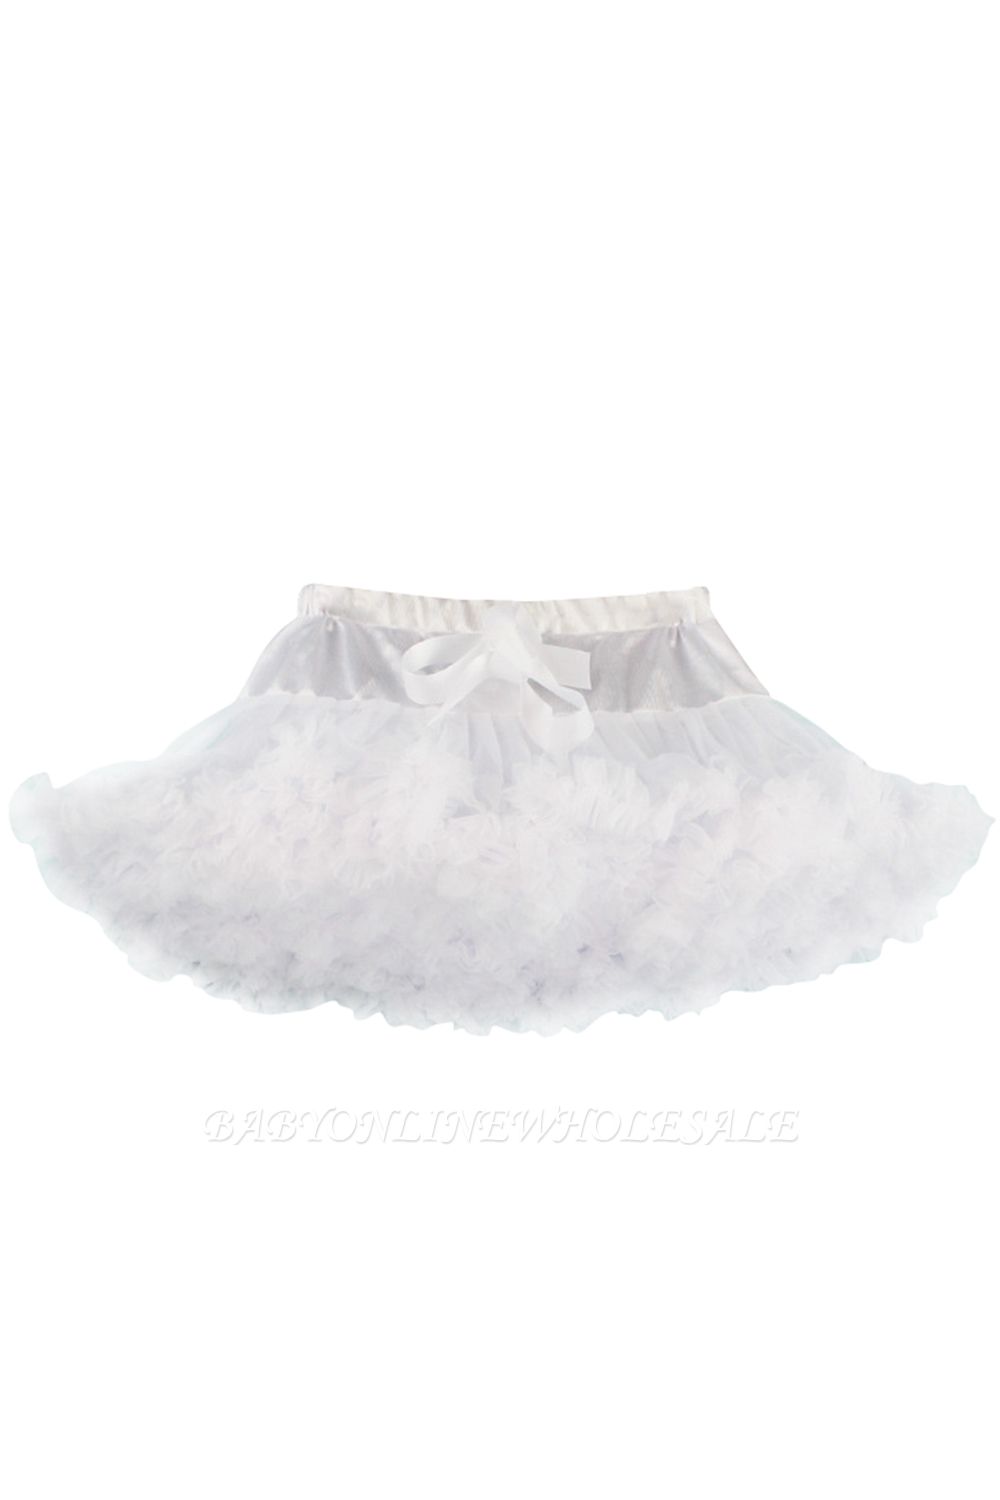 Merveilleuse jupe en tulle mini ligne | Jupes élastiques bowknot femmes